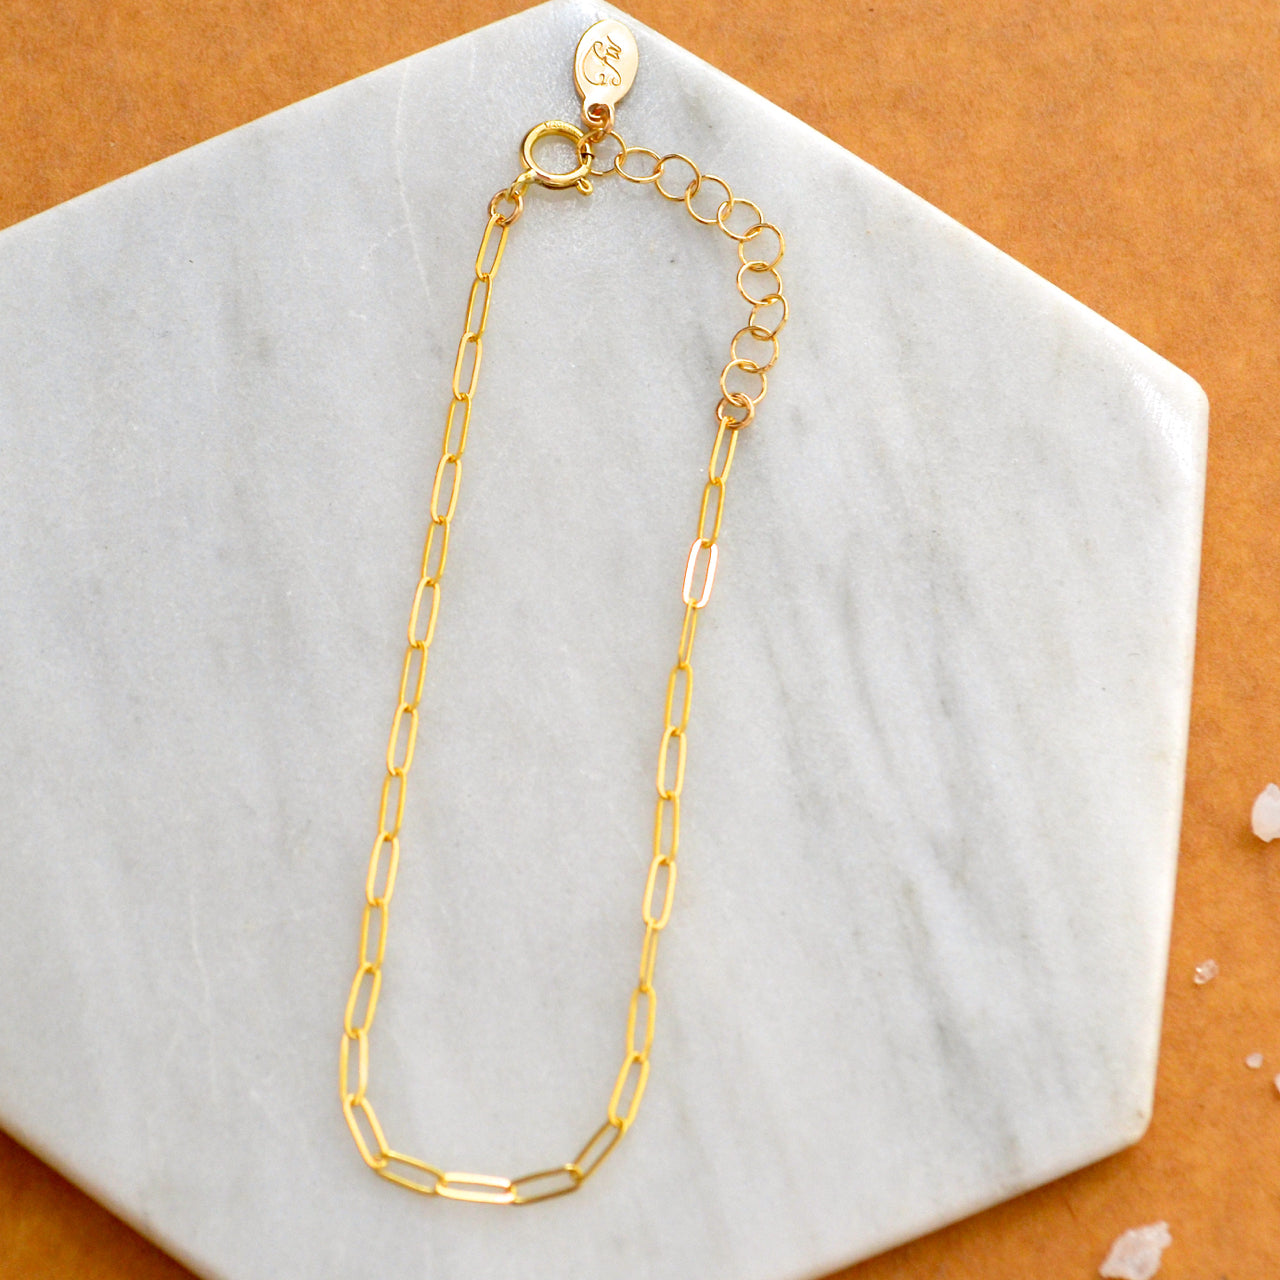 Paperclip Bracelet - Dainty Gold Bracelet - Waterproof Bracelet